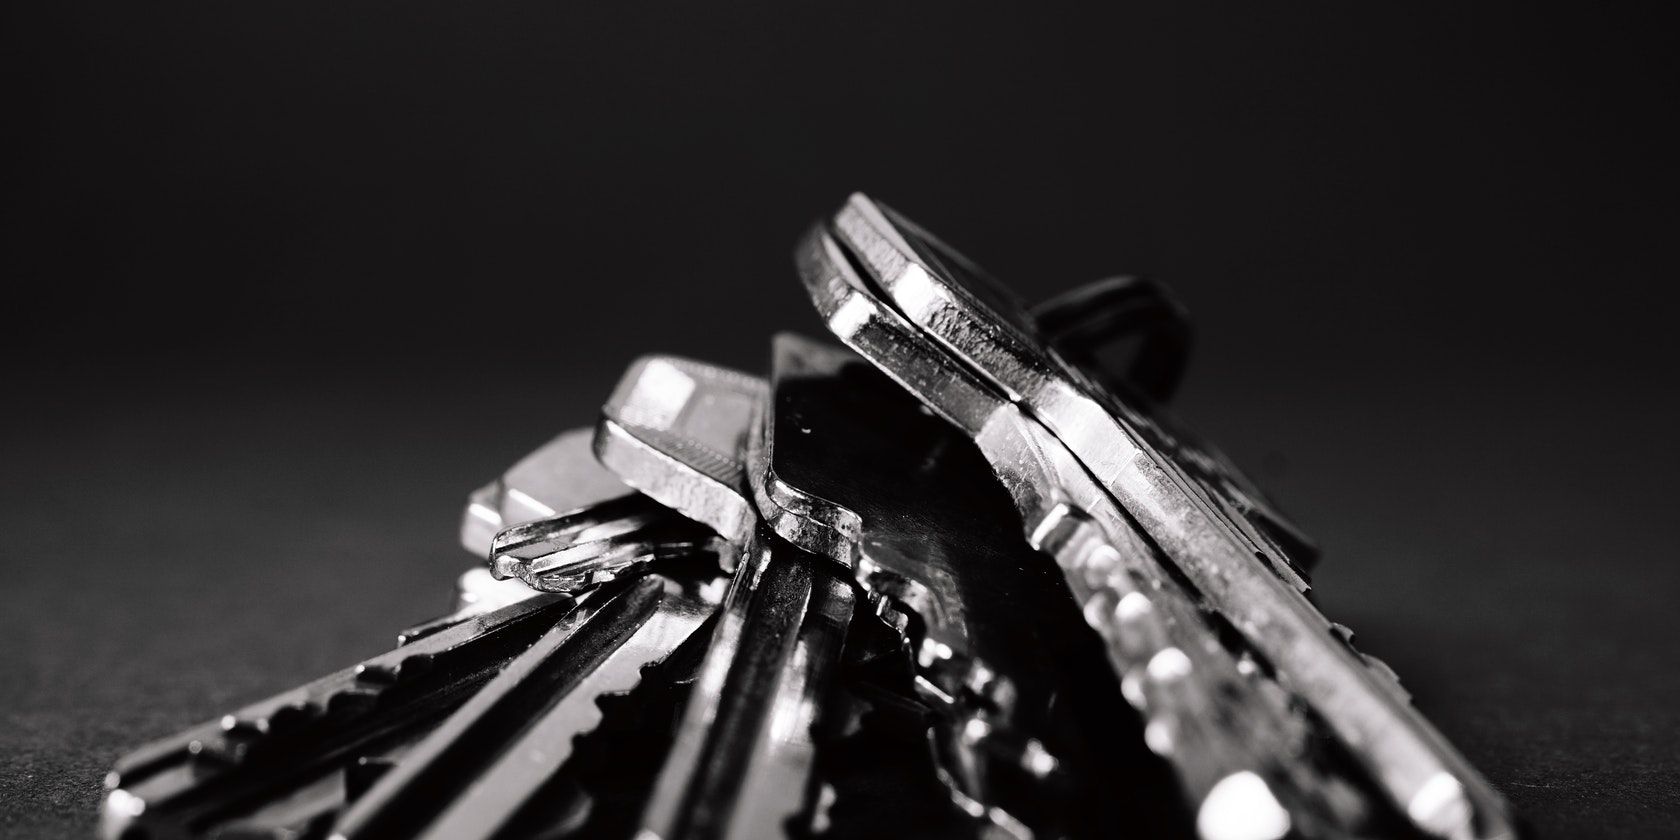 Close up of keys